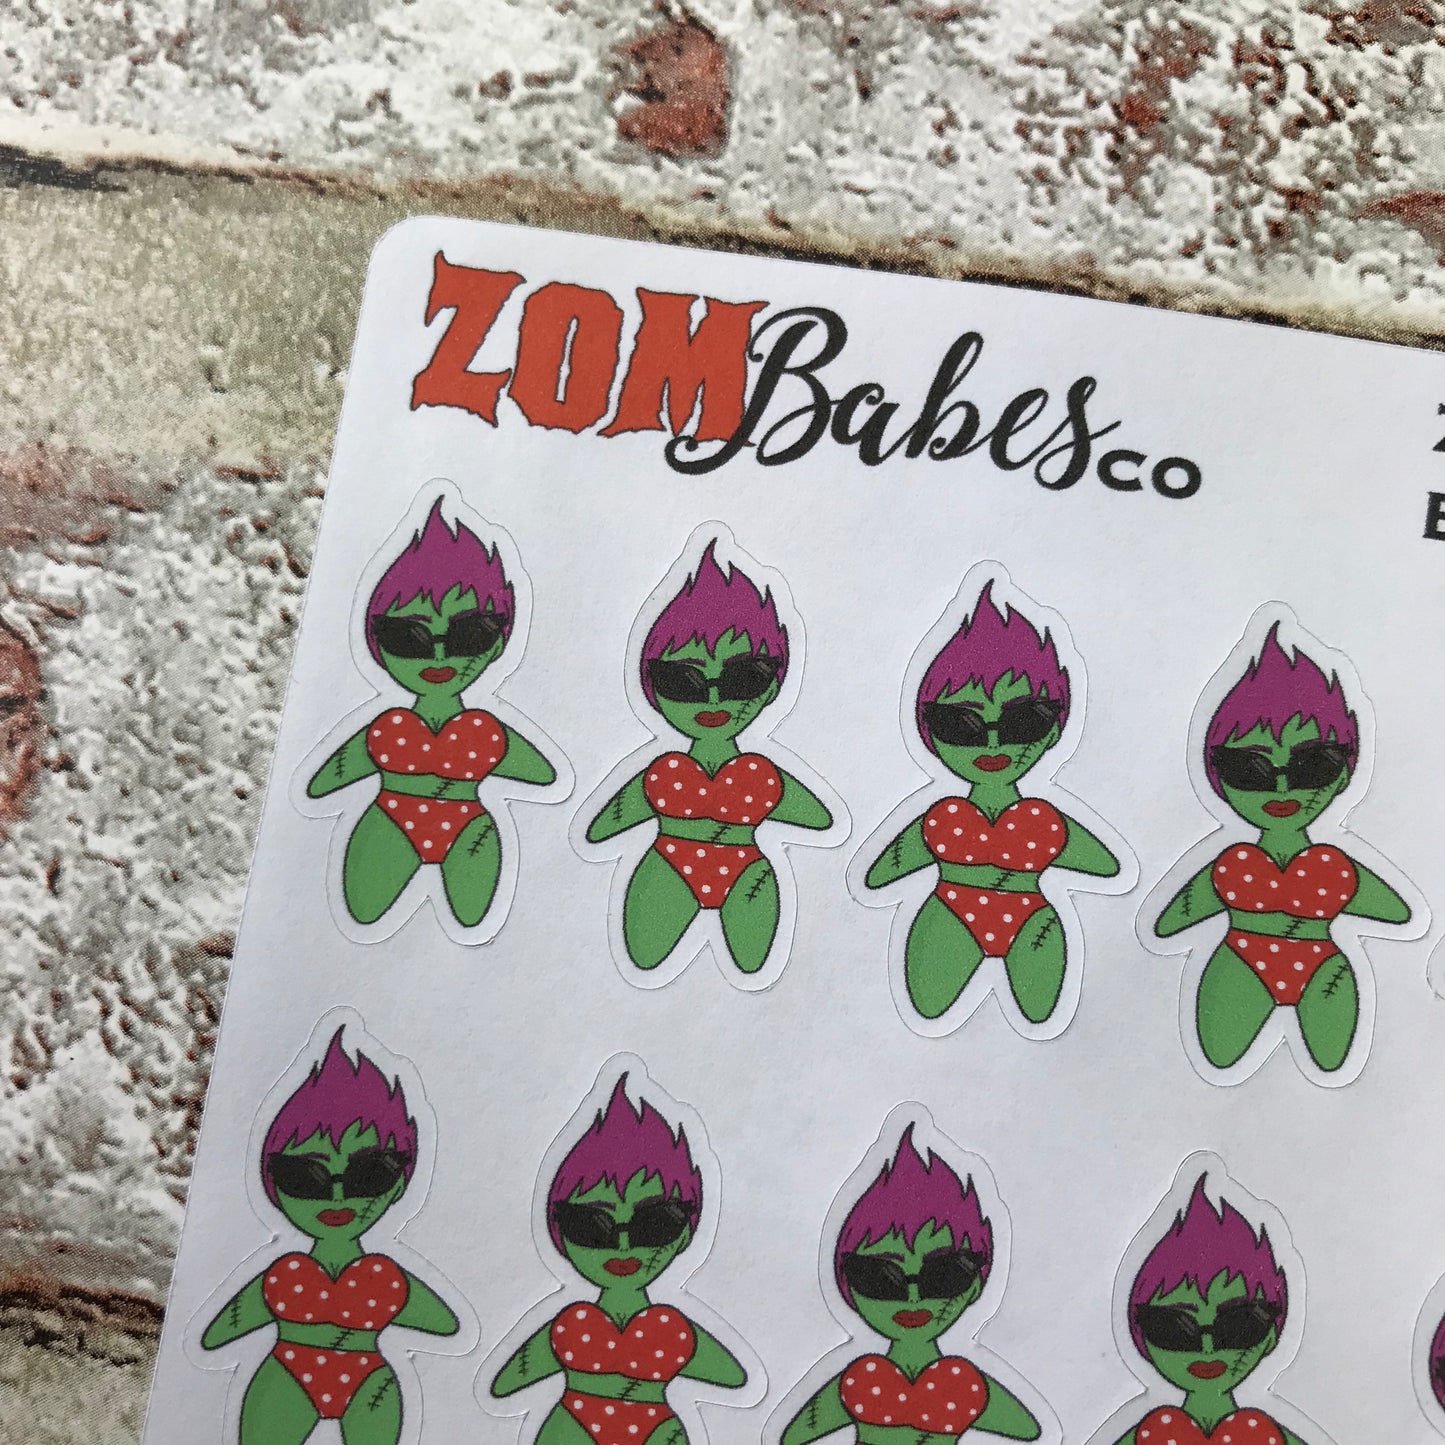 Summer / bikini  Zombabe sticker for planners (ZB22)